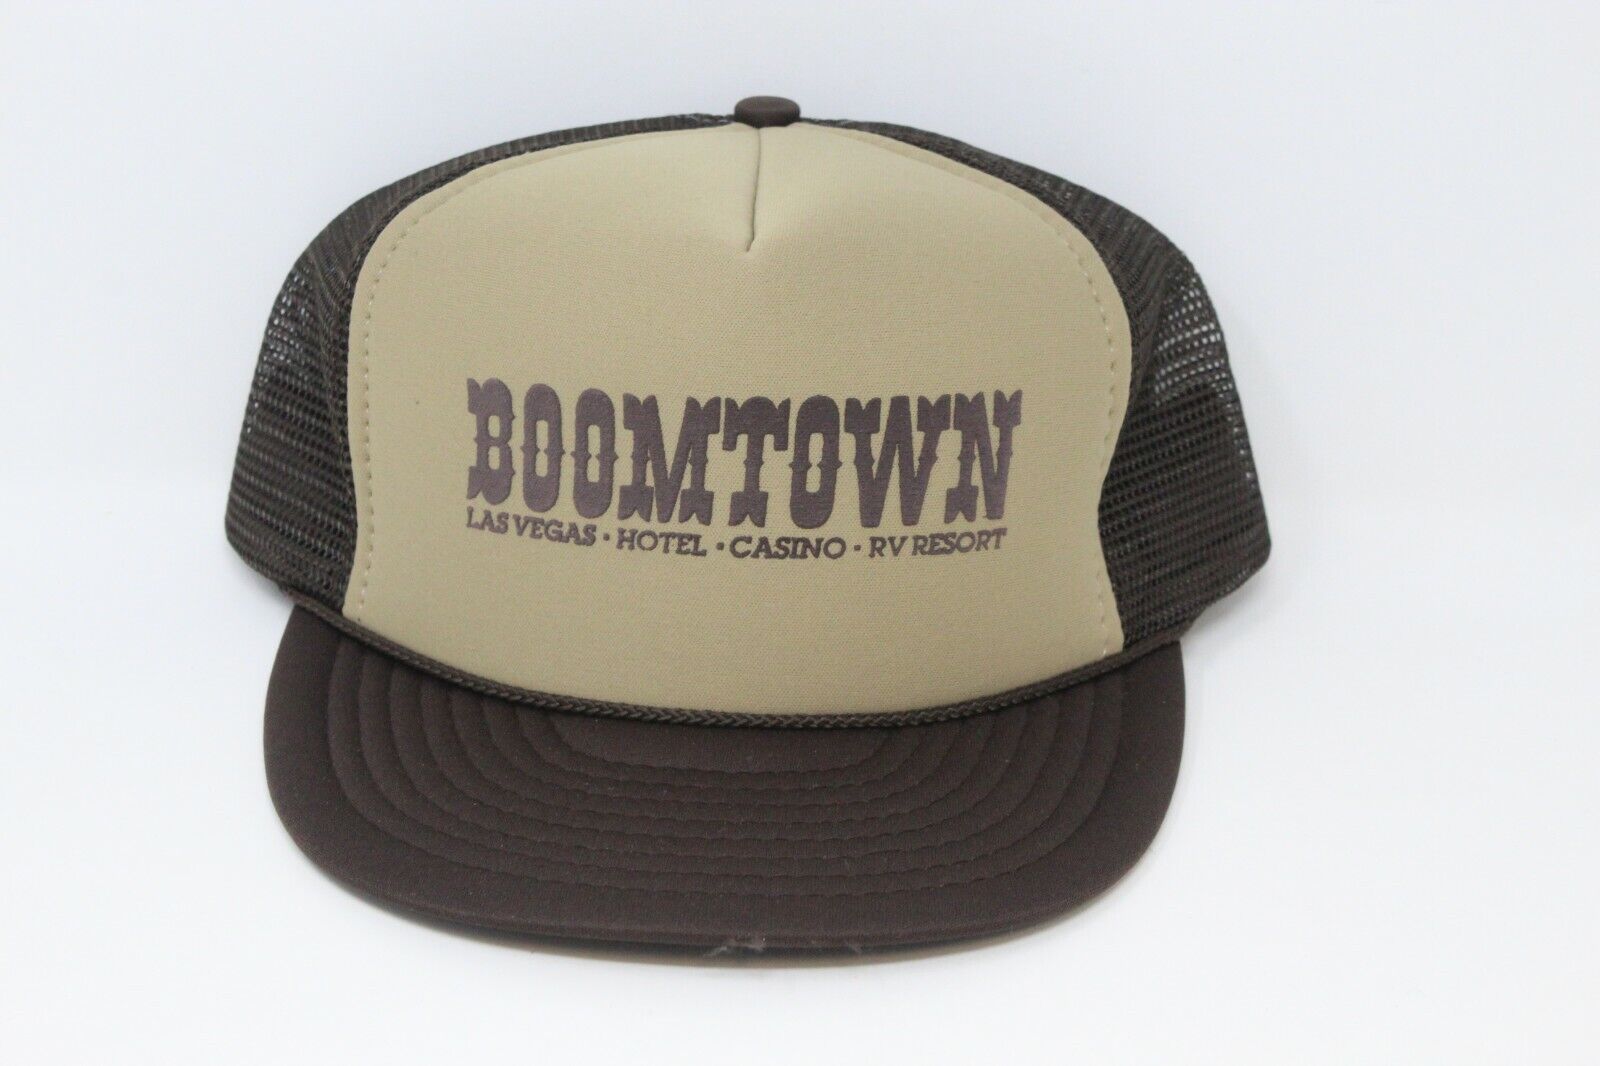 Vintage Boomtown Las Vegas Casino Truckers Hat, NISSIN Brand Hat